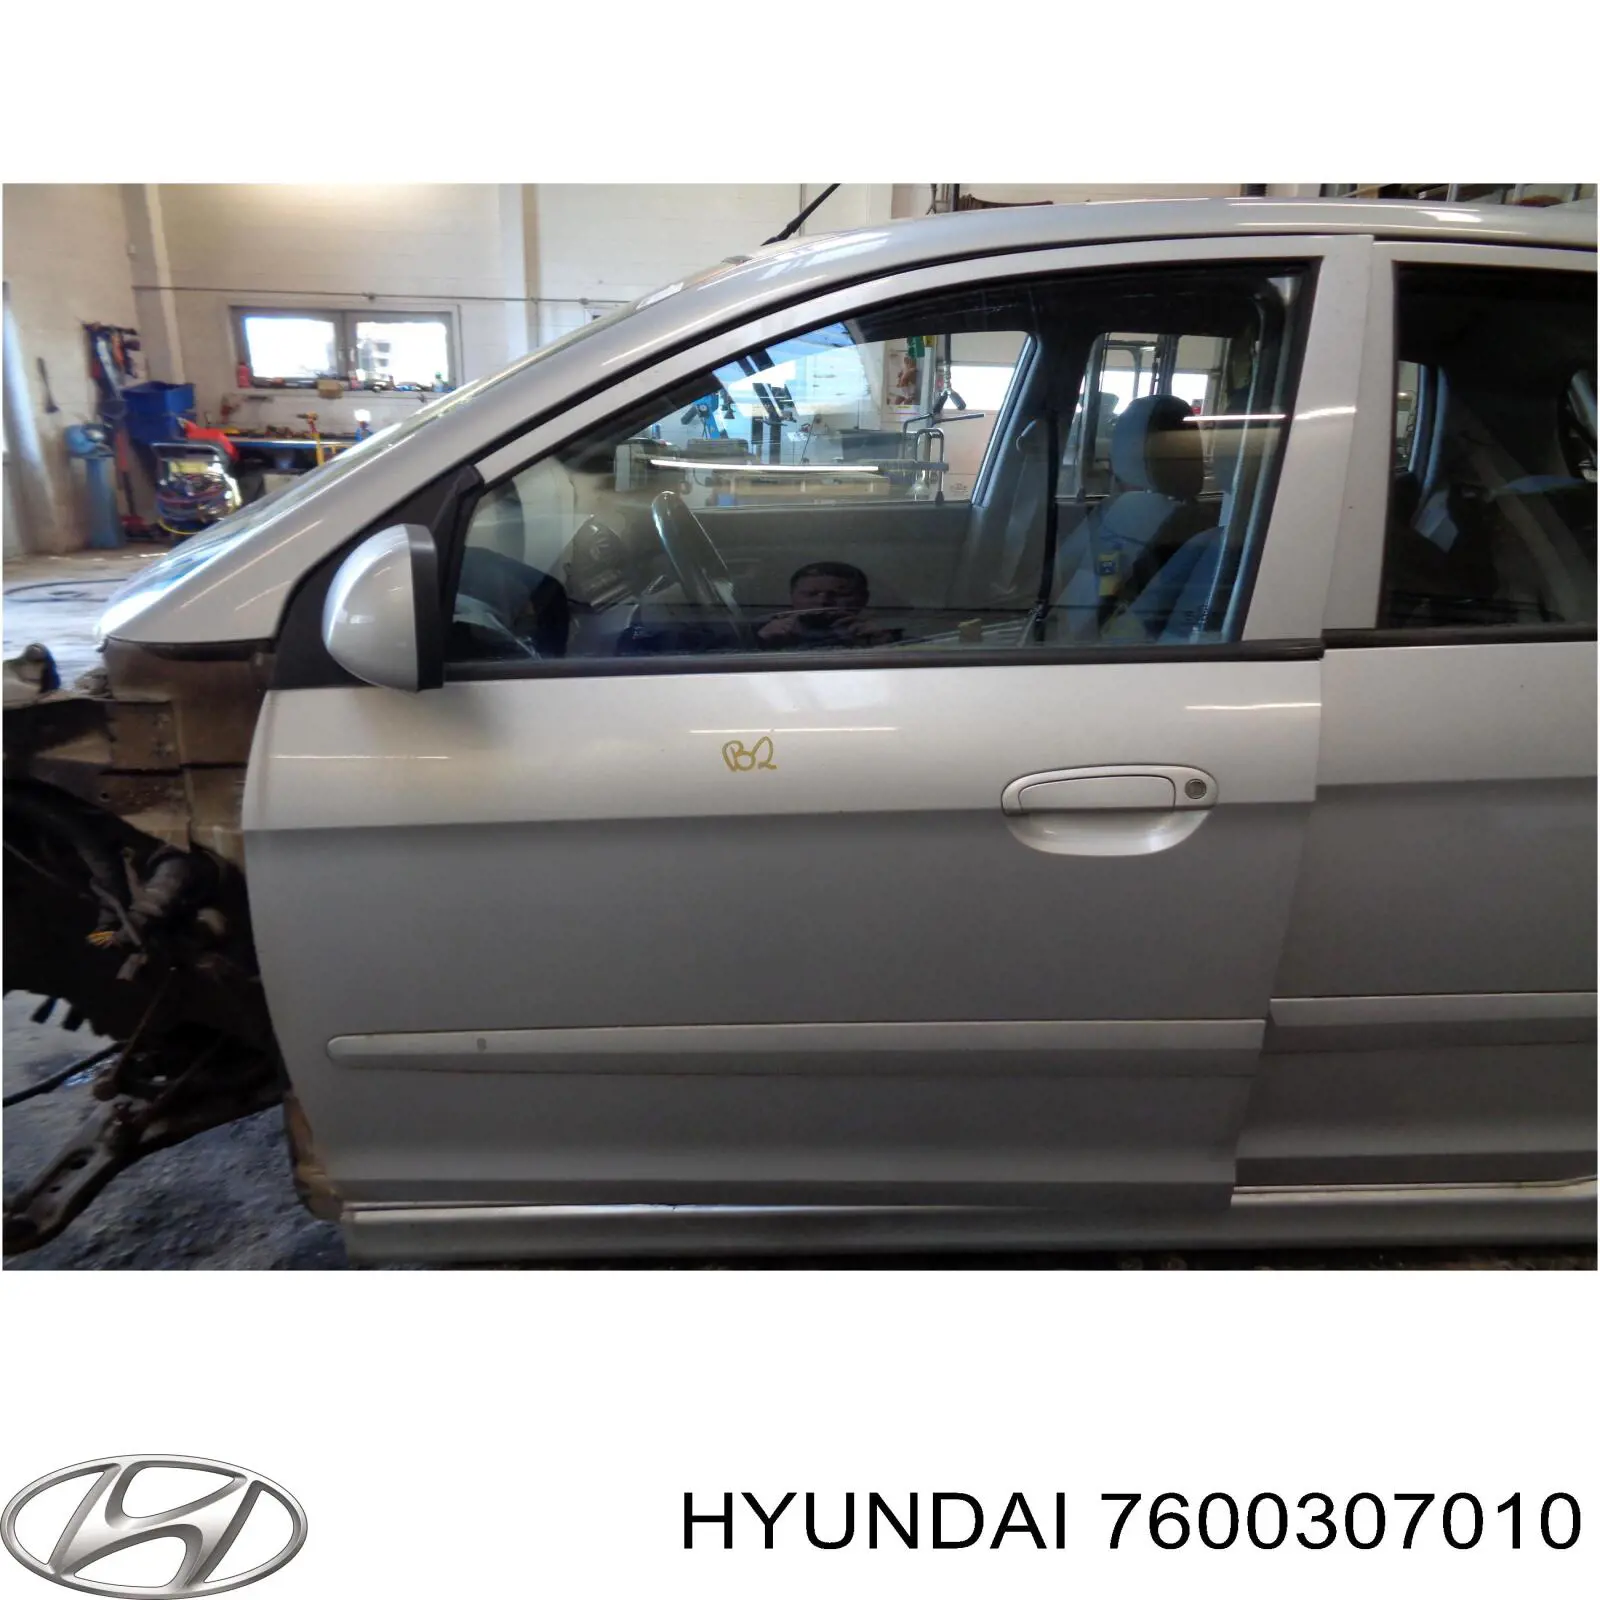 7600307010 Hyundai/Kia puerta delantera izquierda